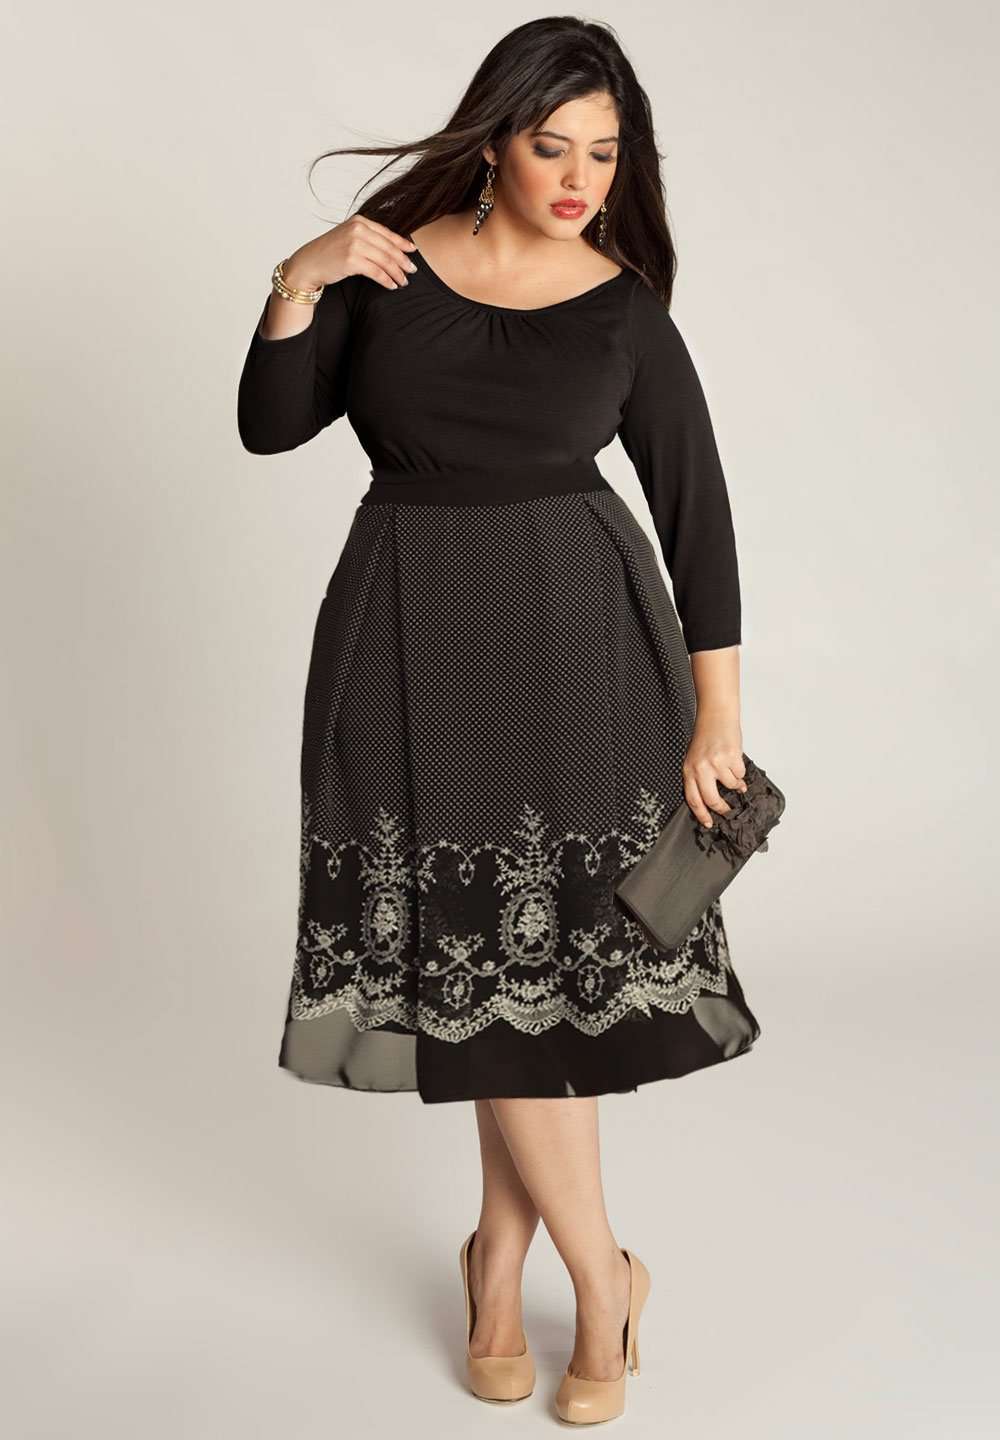 Buy FairOnly Women Plus-size Floral Chiffon Dress Large Hem Slim Waist  Fashion Beach Dress black M at Amazon.in